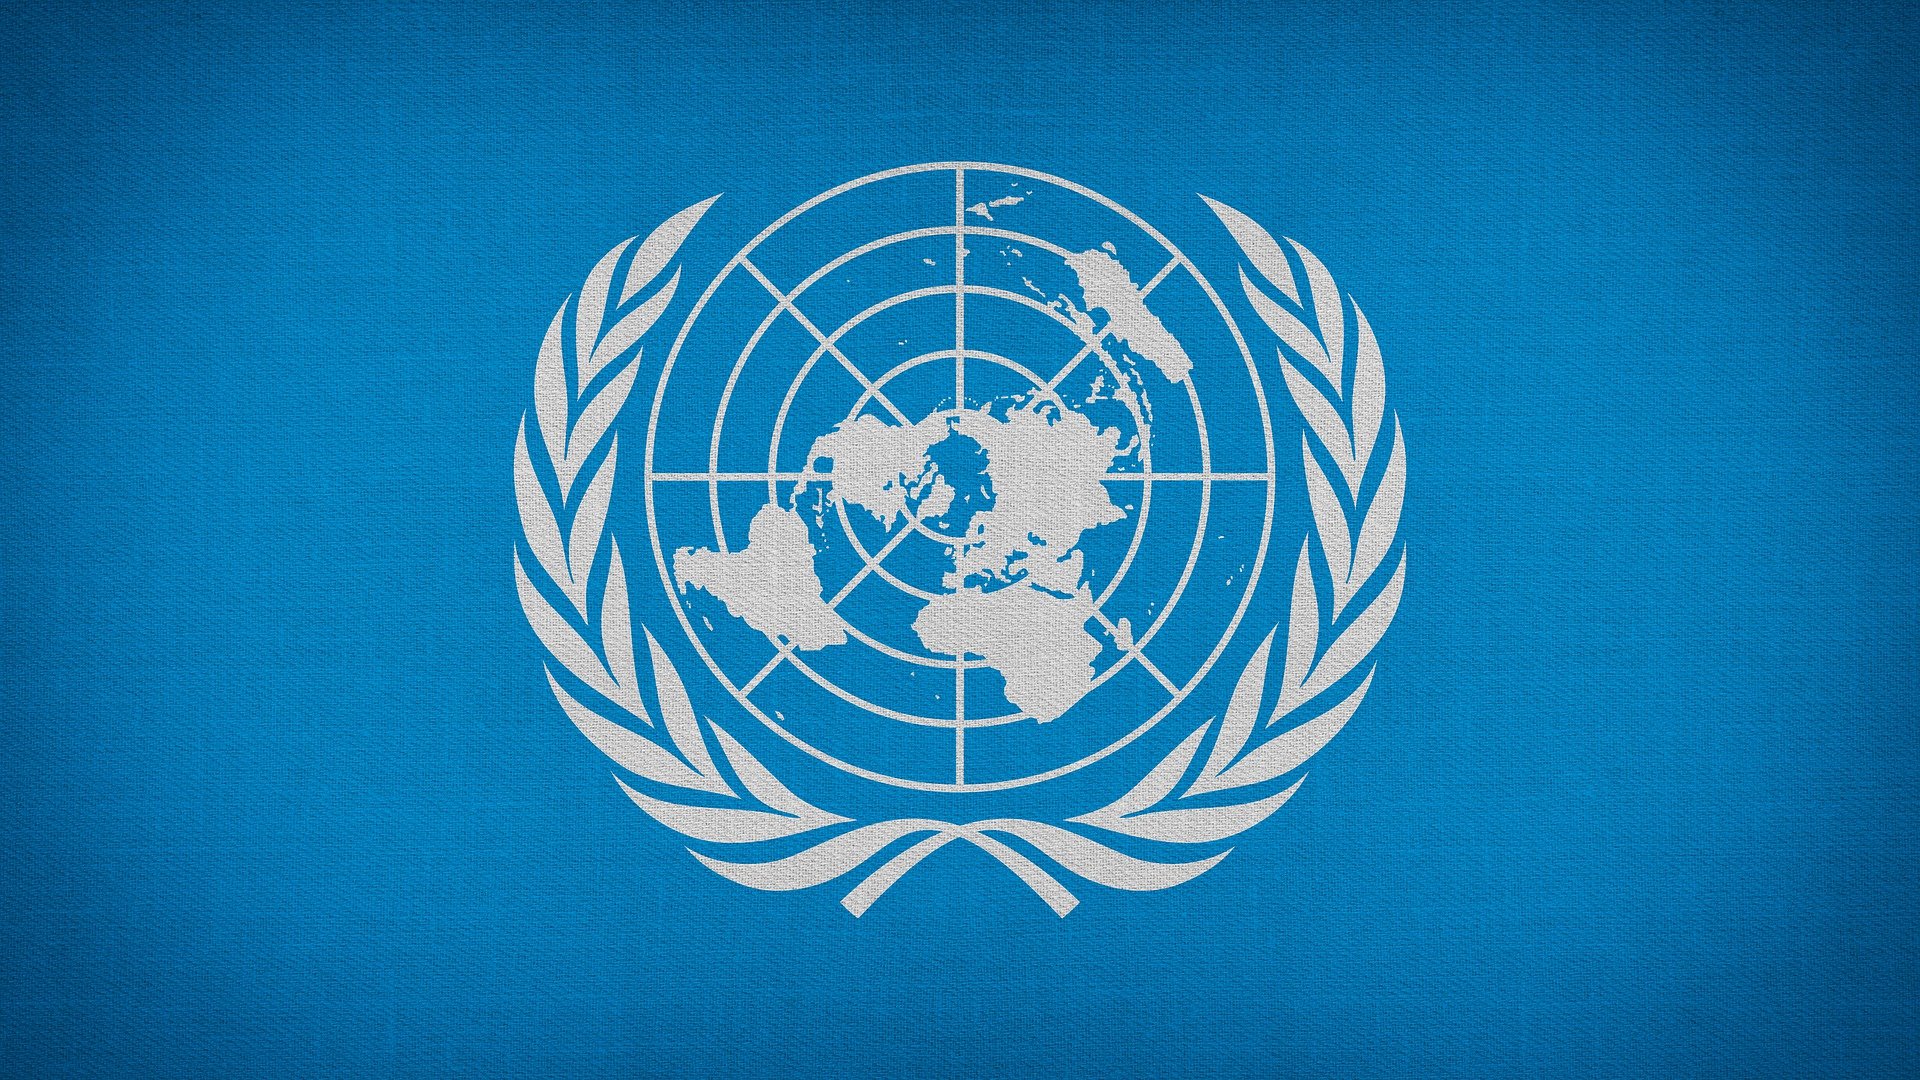 Россия наложила вето на резолюцию Совбеза ООН о продлении мандата экспертов по санкциям против КНДР